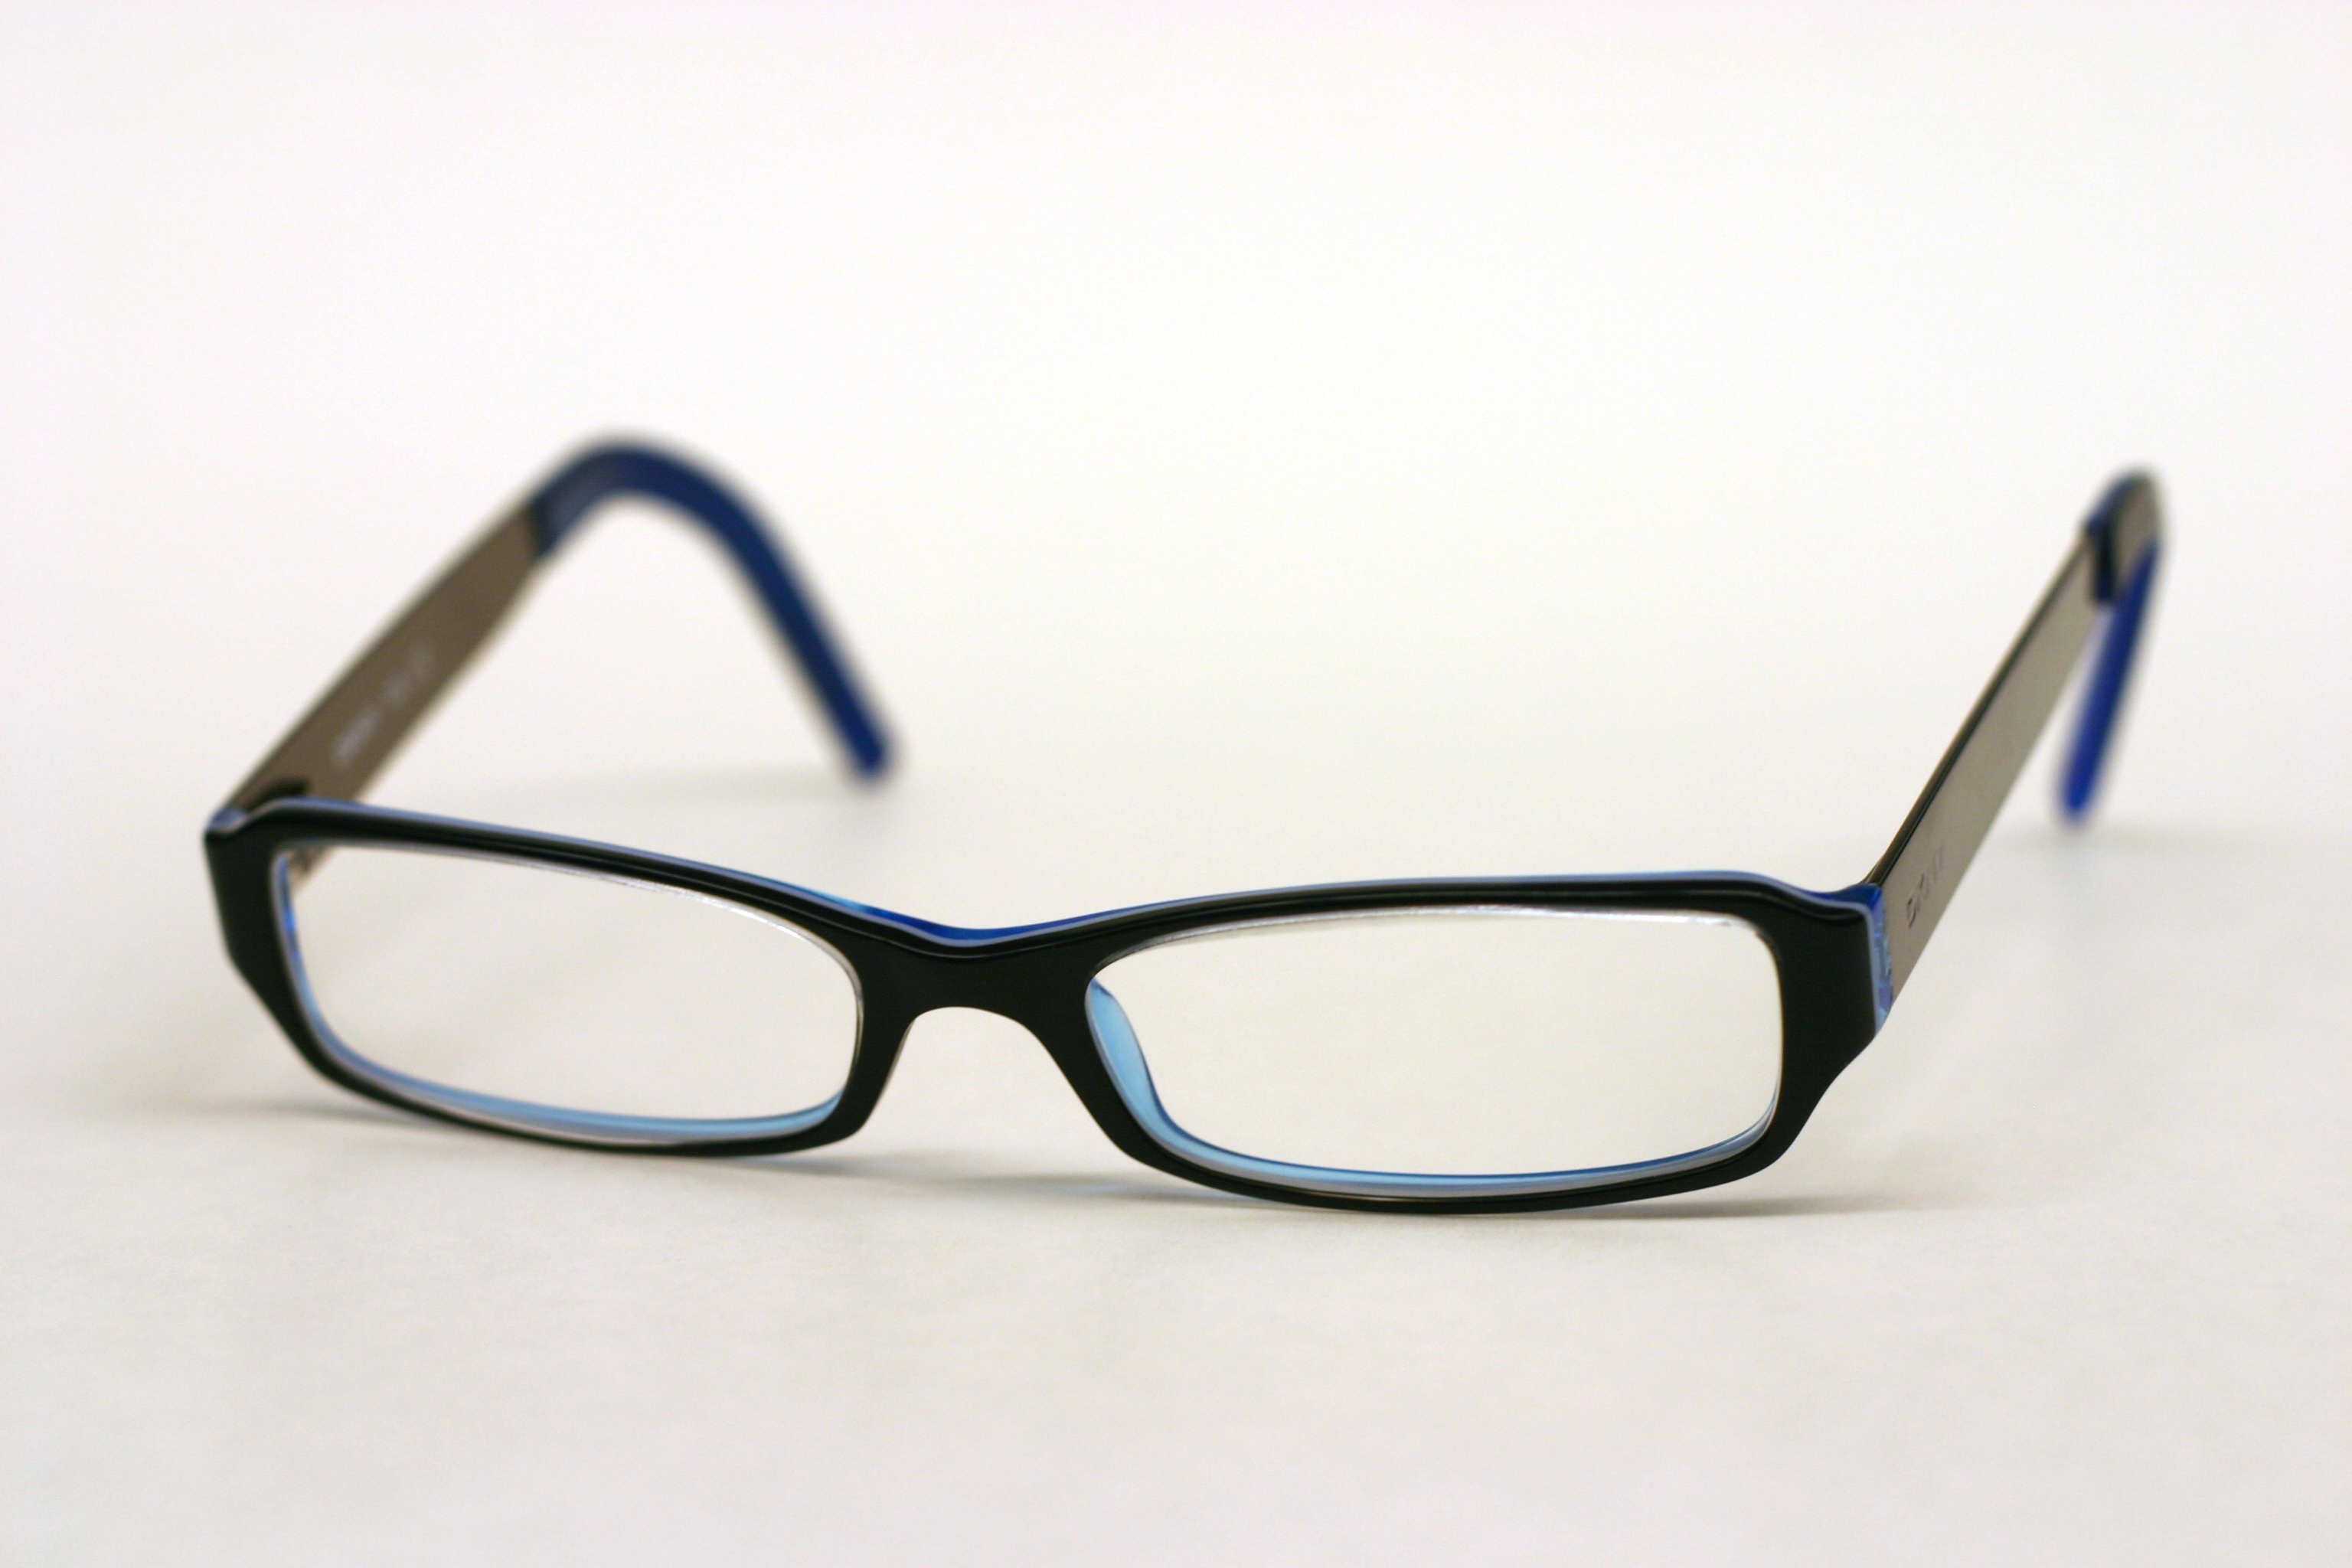 File:DKNY Glasses - Wikimedia Commons